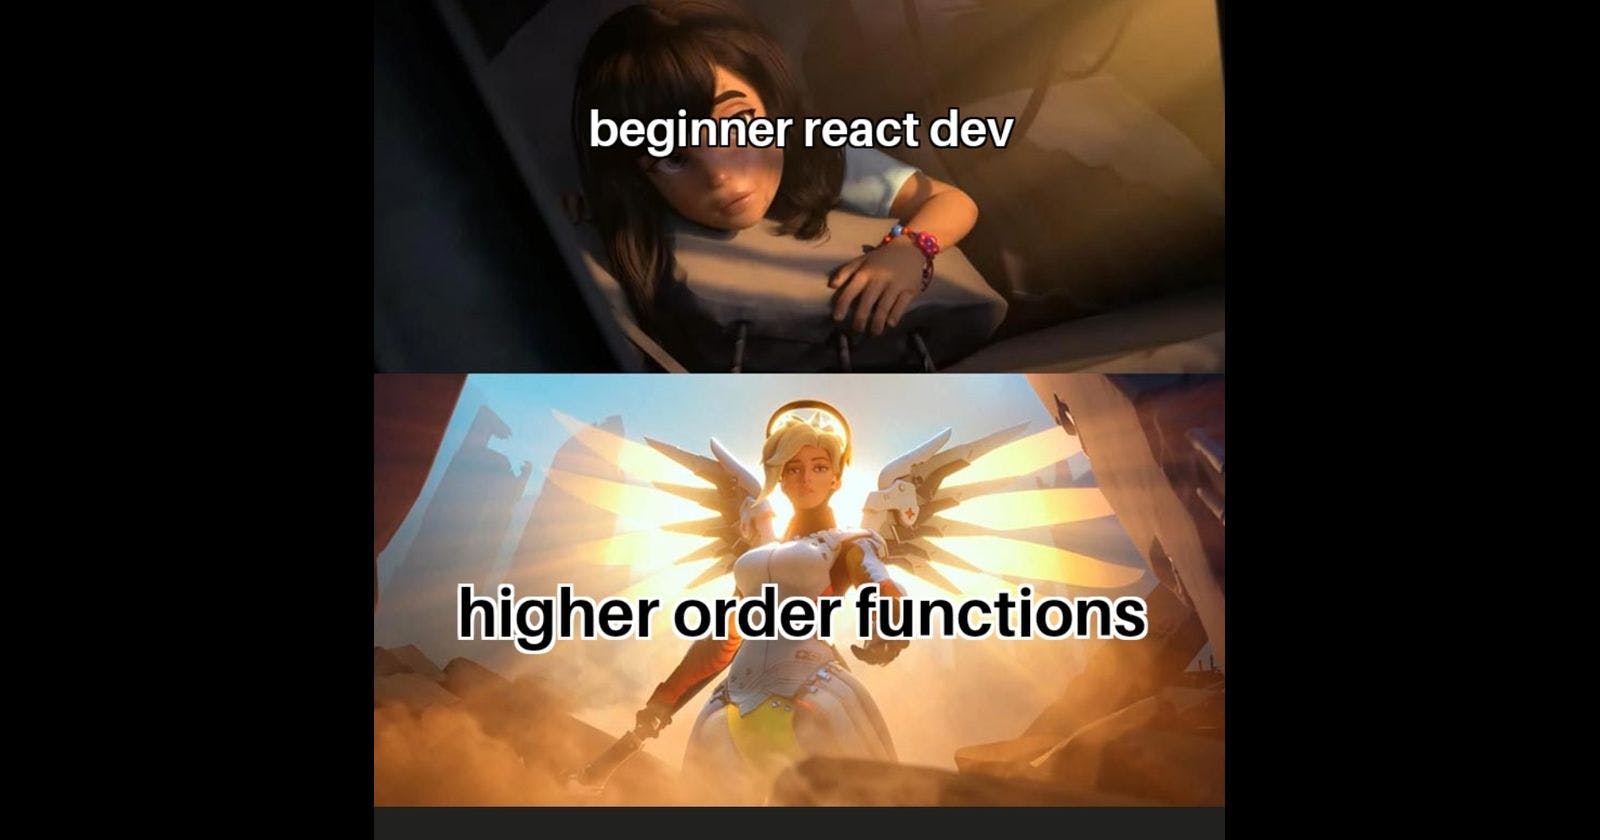 Higher-Order Function